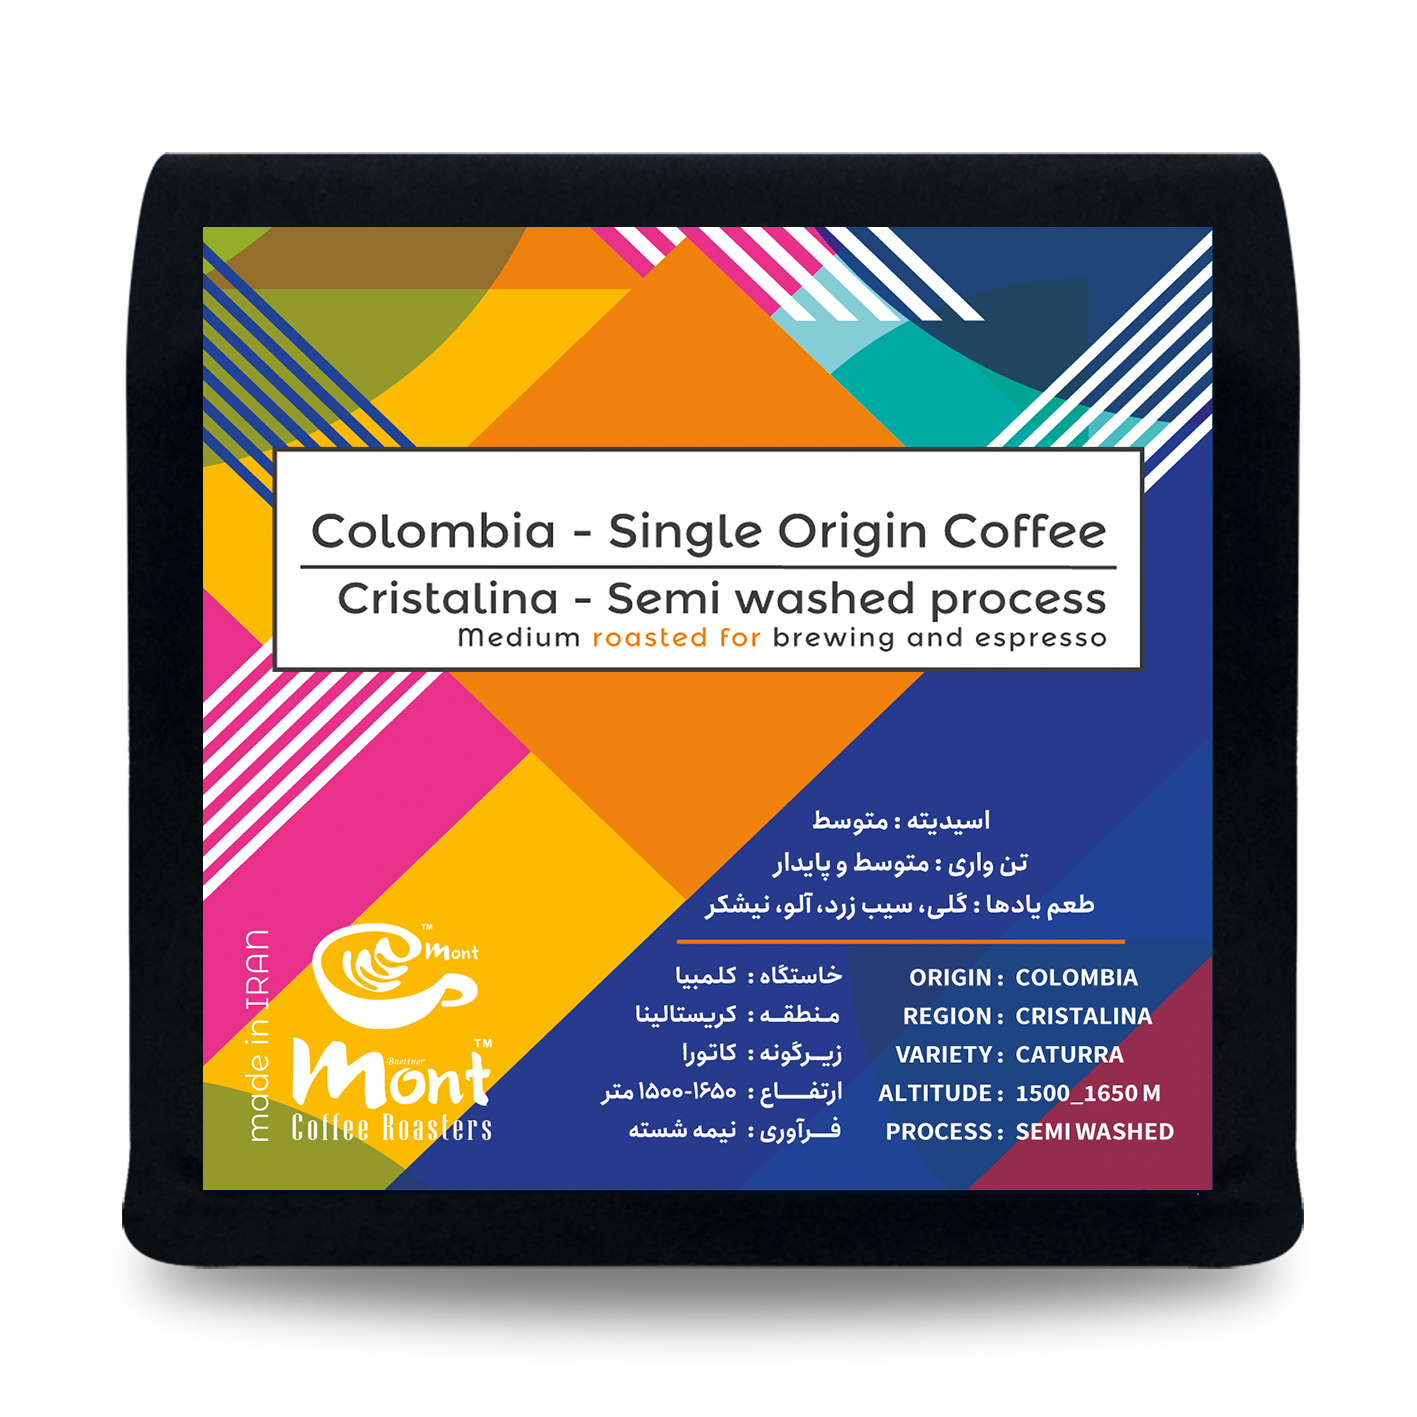  دانه قهوه اسپشالتی کلمبیا کریستالینا مونت - 250 گرم